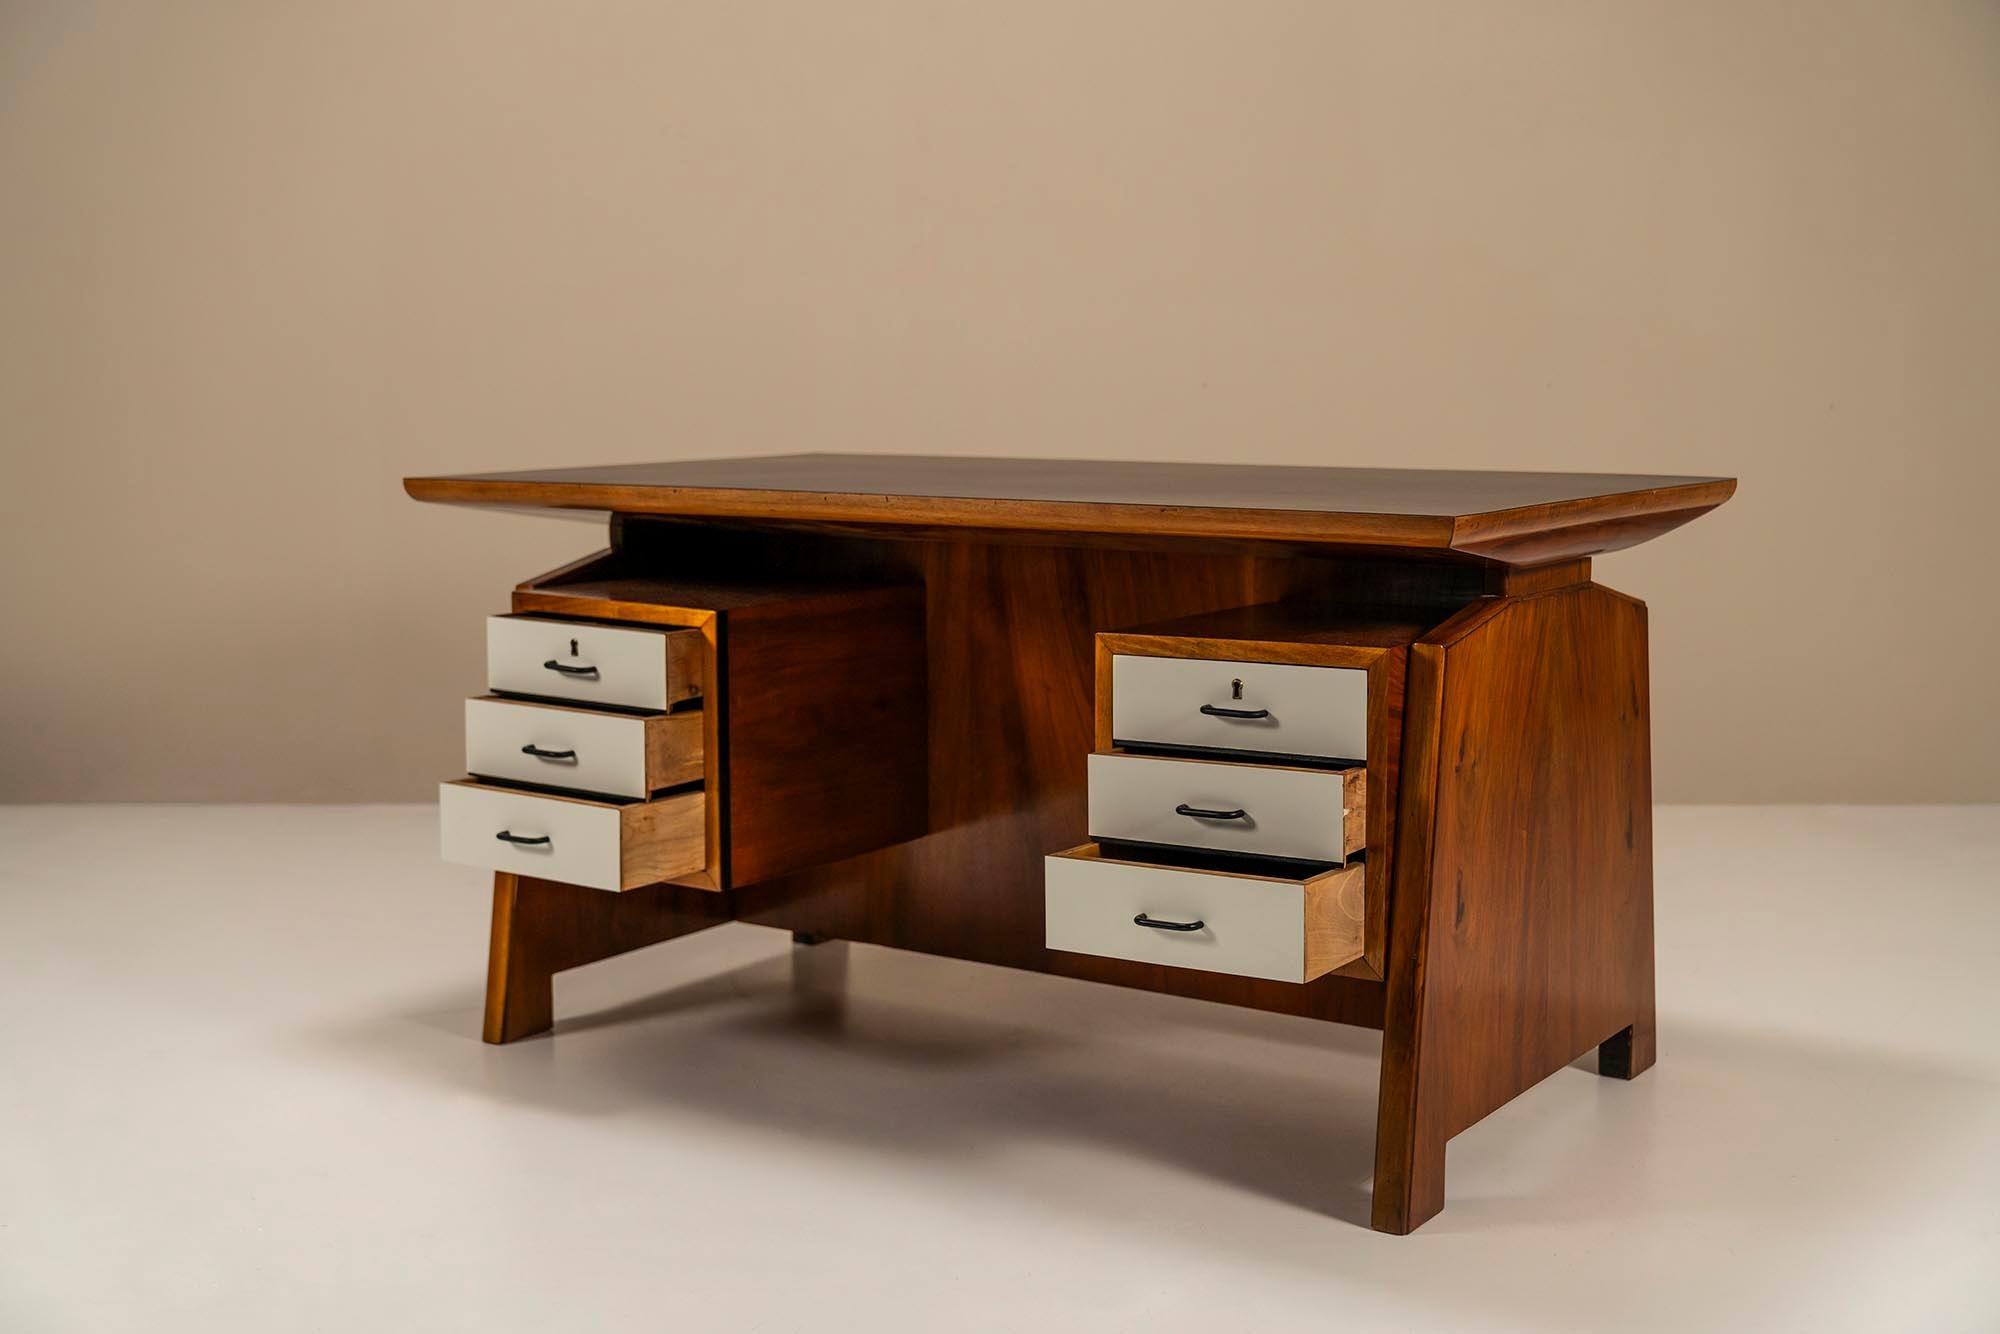 Architectural Desk In Walnut By Carlo de Carli, Italy 1950's In Good Condition For Sale In Hellouw, NL